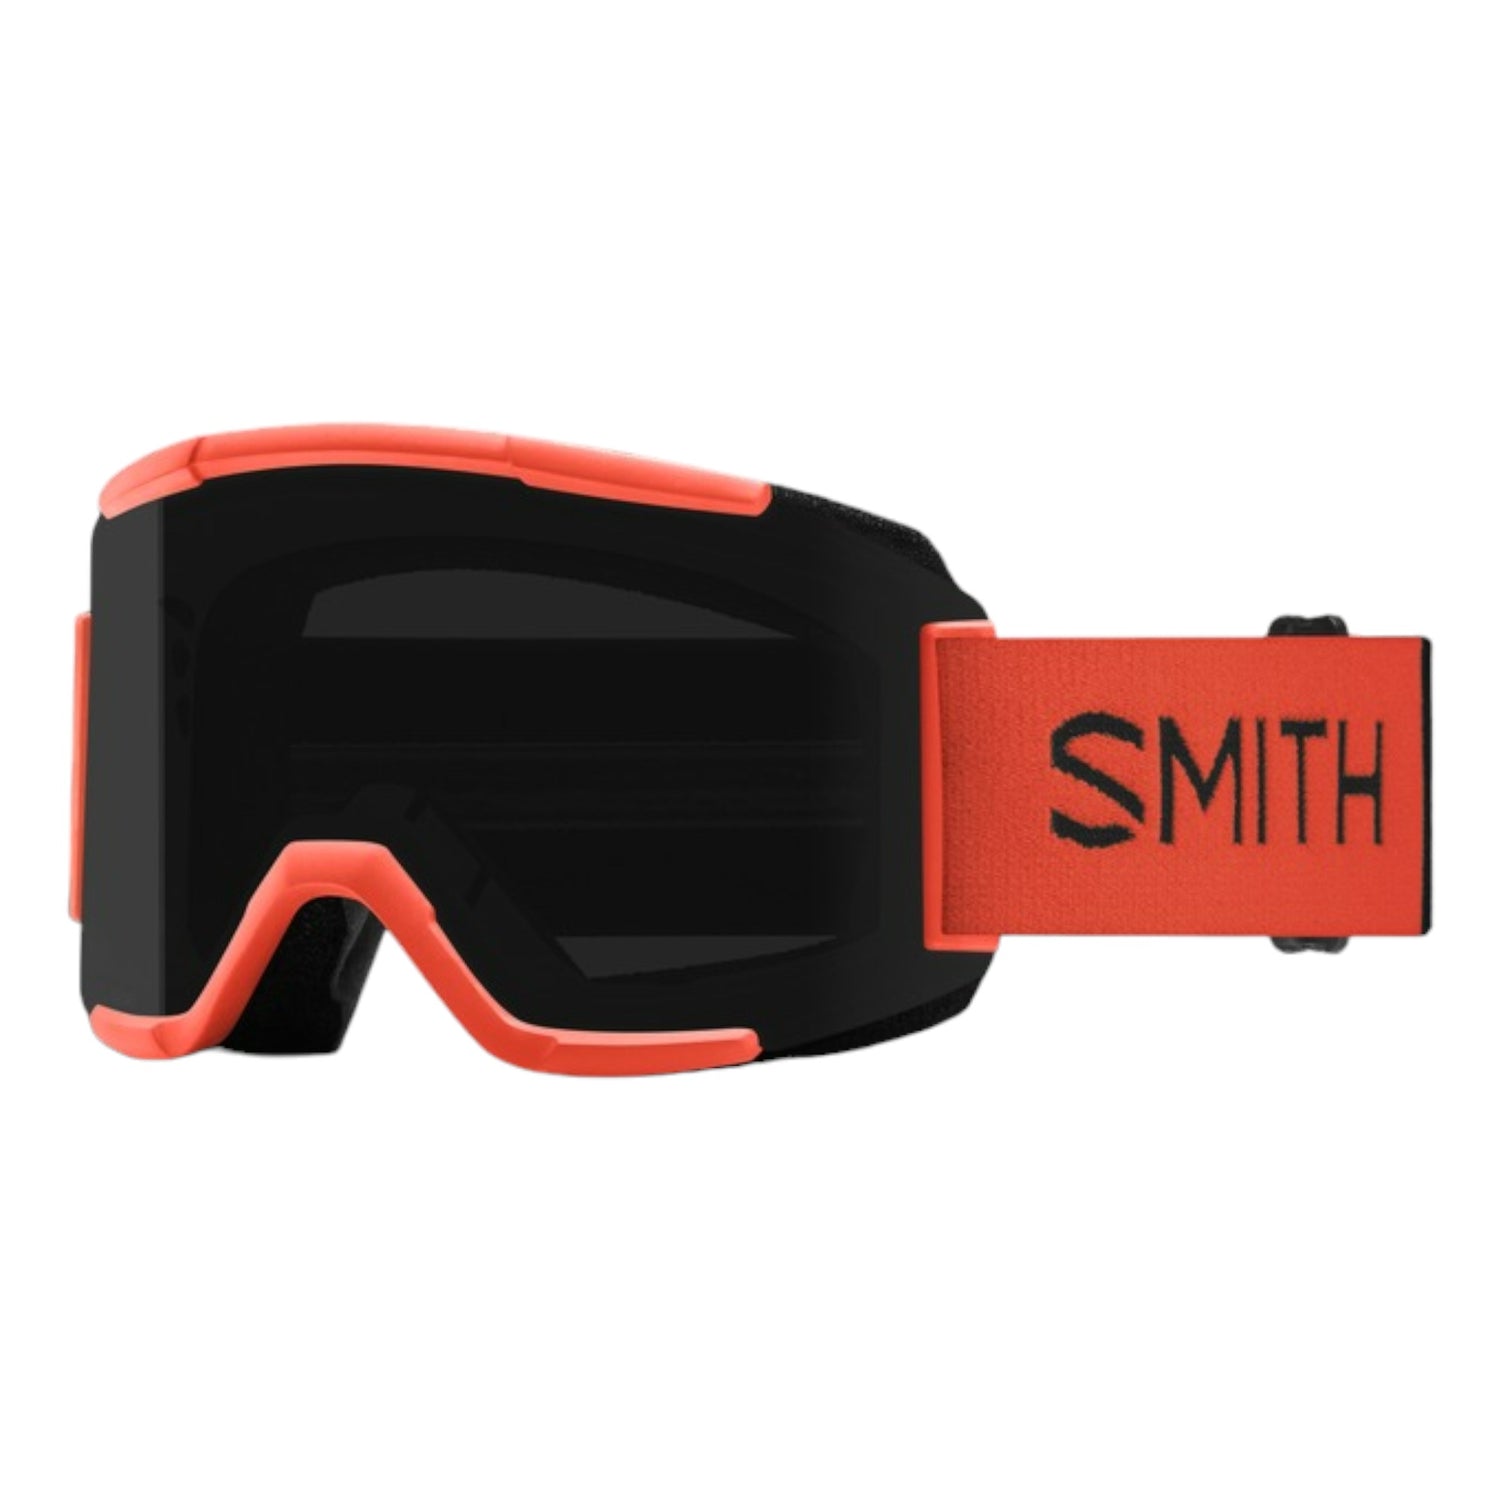 Squad Adult Ski Goggles